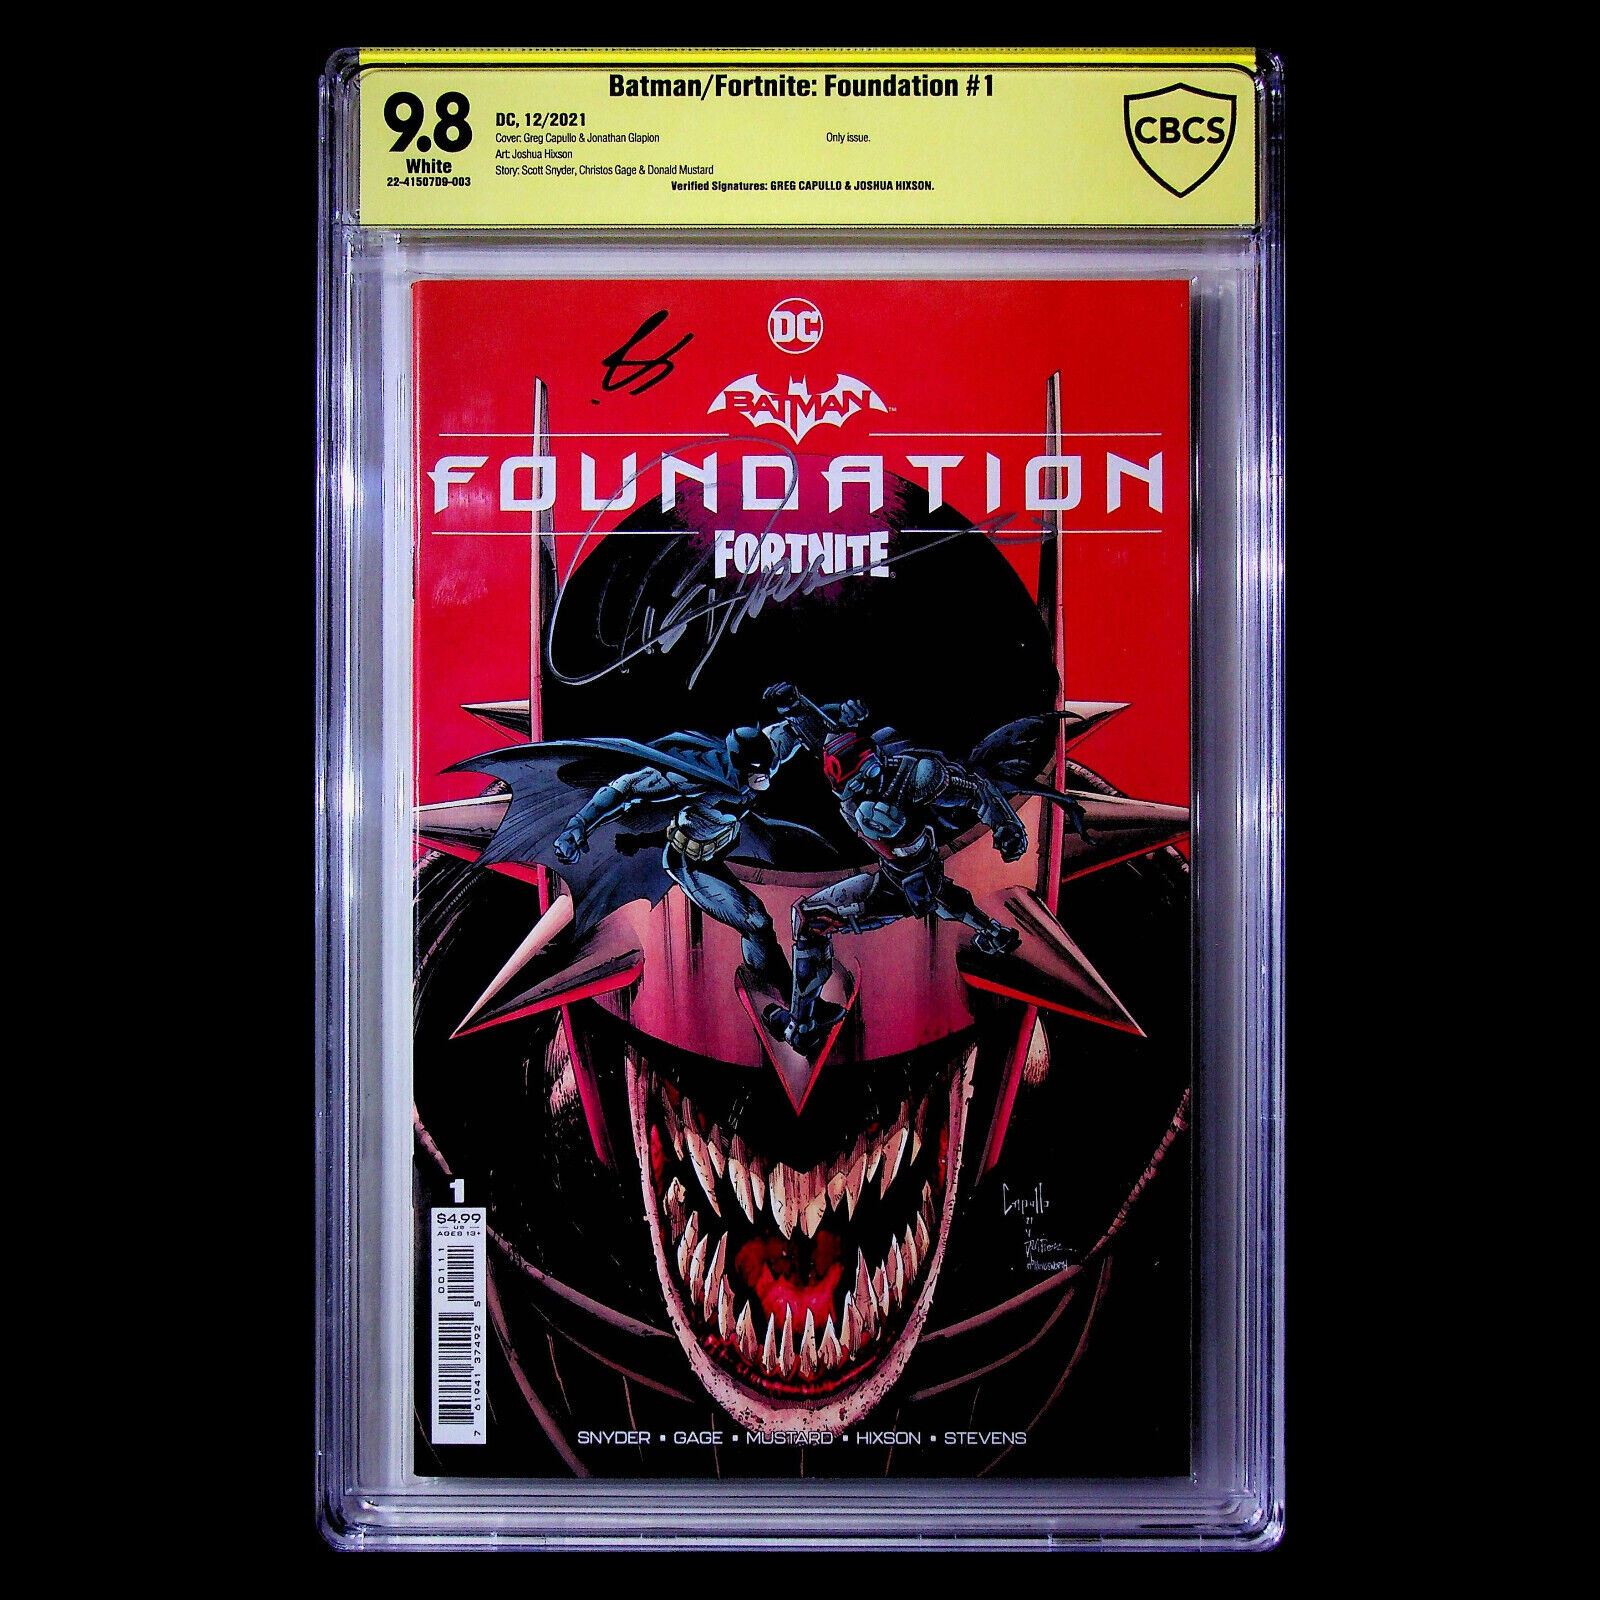 Batman/Fortnight Foundation #1 9.8 CBCS VS x2